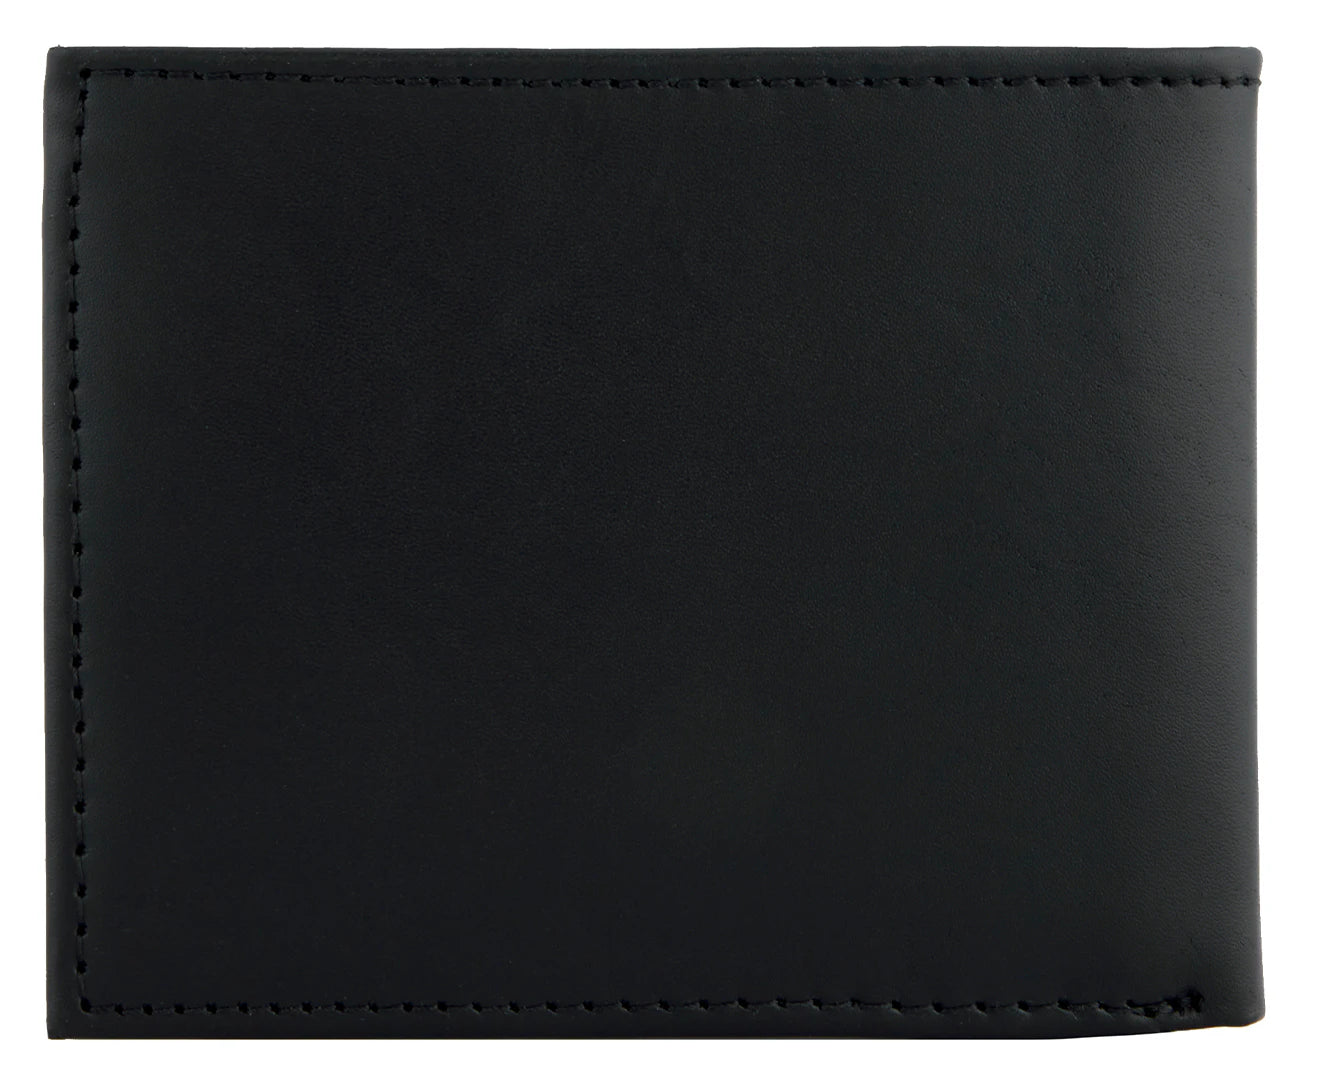 Tommy Hilfiger Men's Leather Wallet Cambridge Passcase Billfold Wallet, Black (Back)